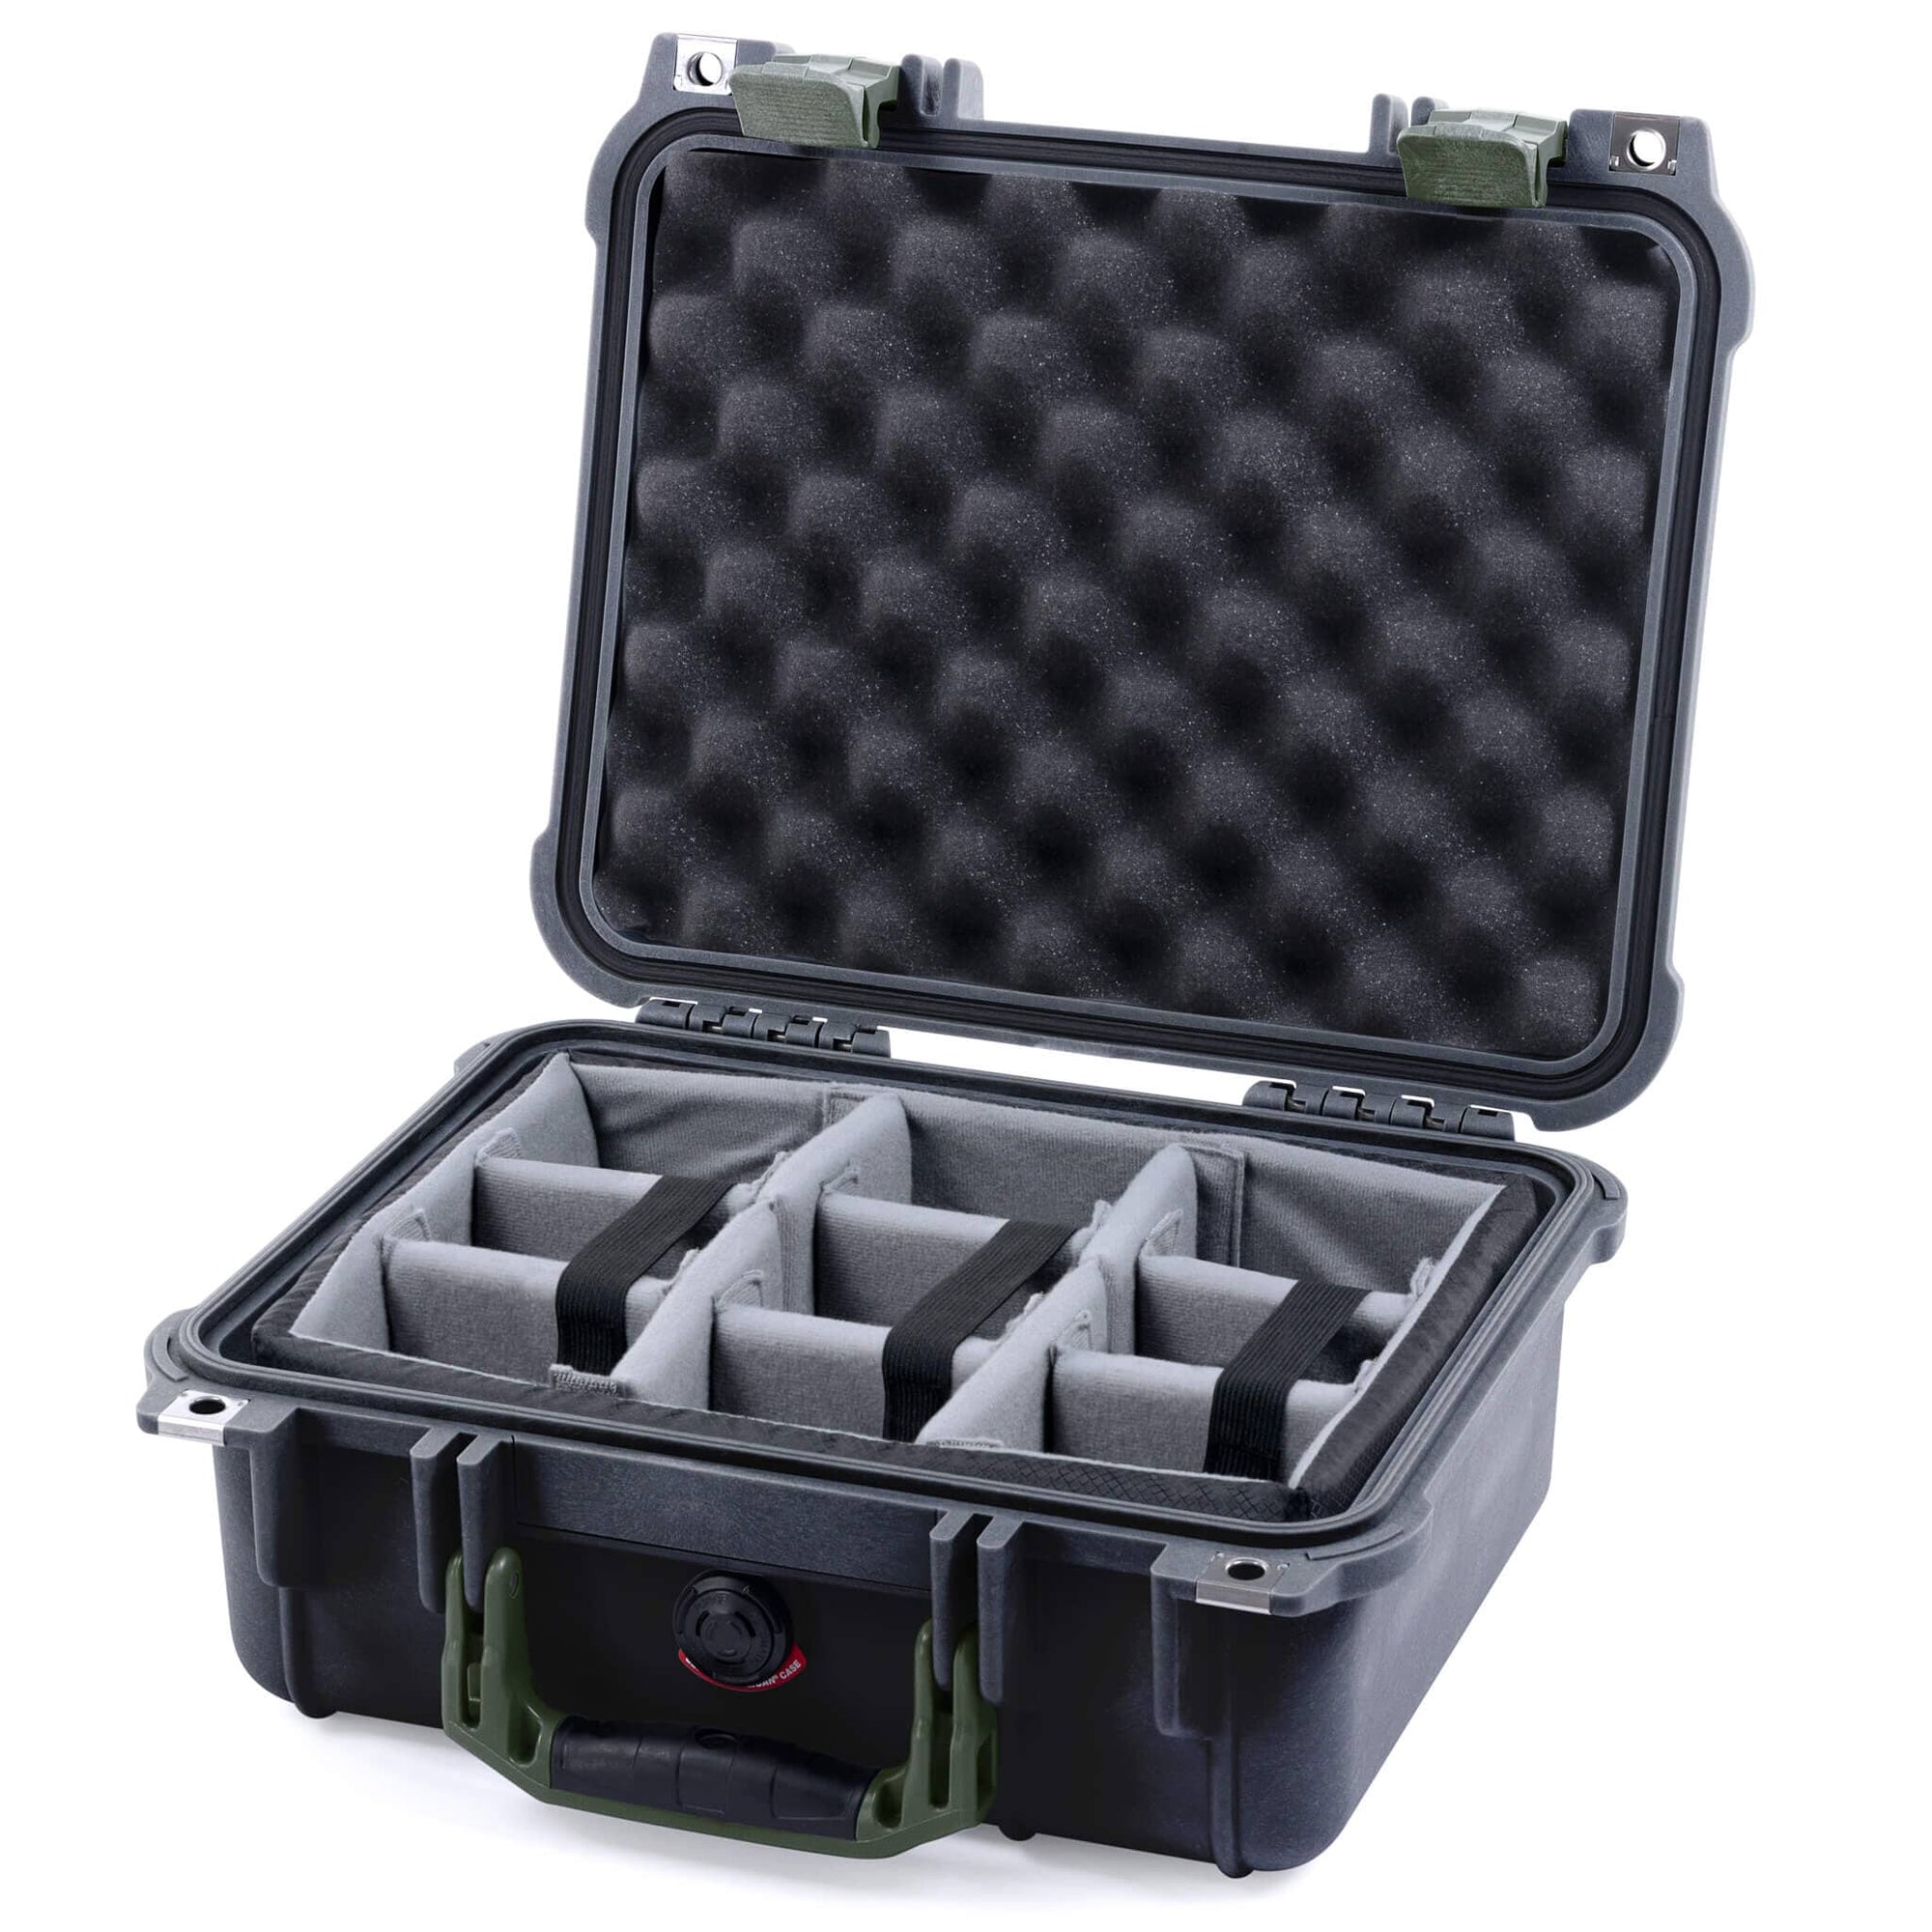 Black & OD Green Pelican 1400 Protector Case